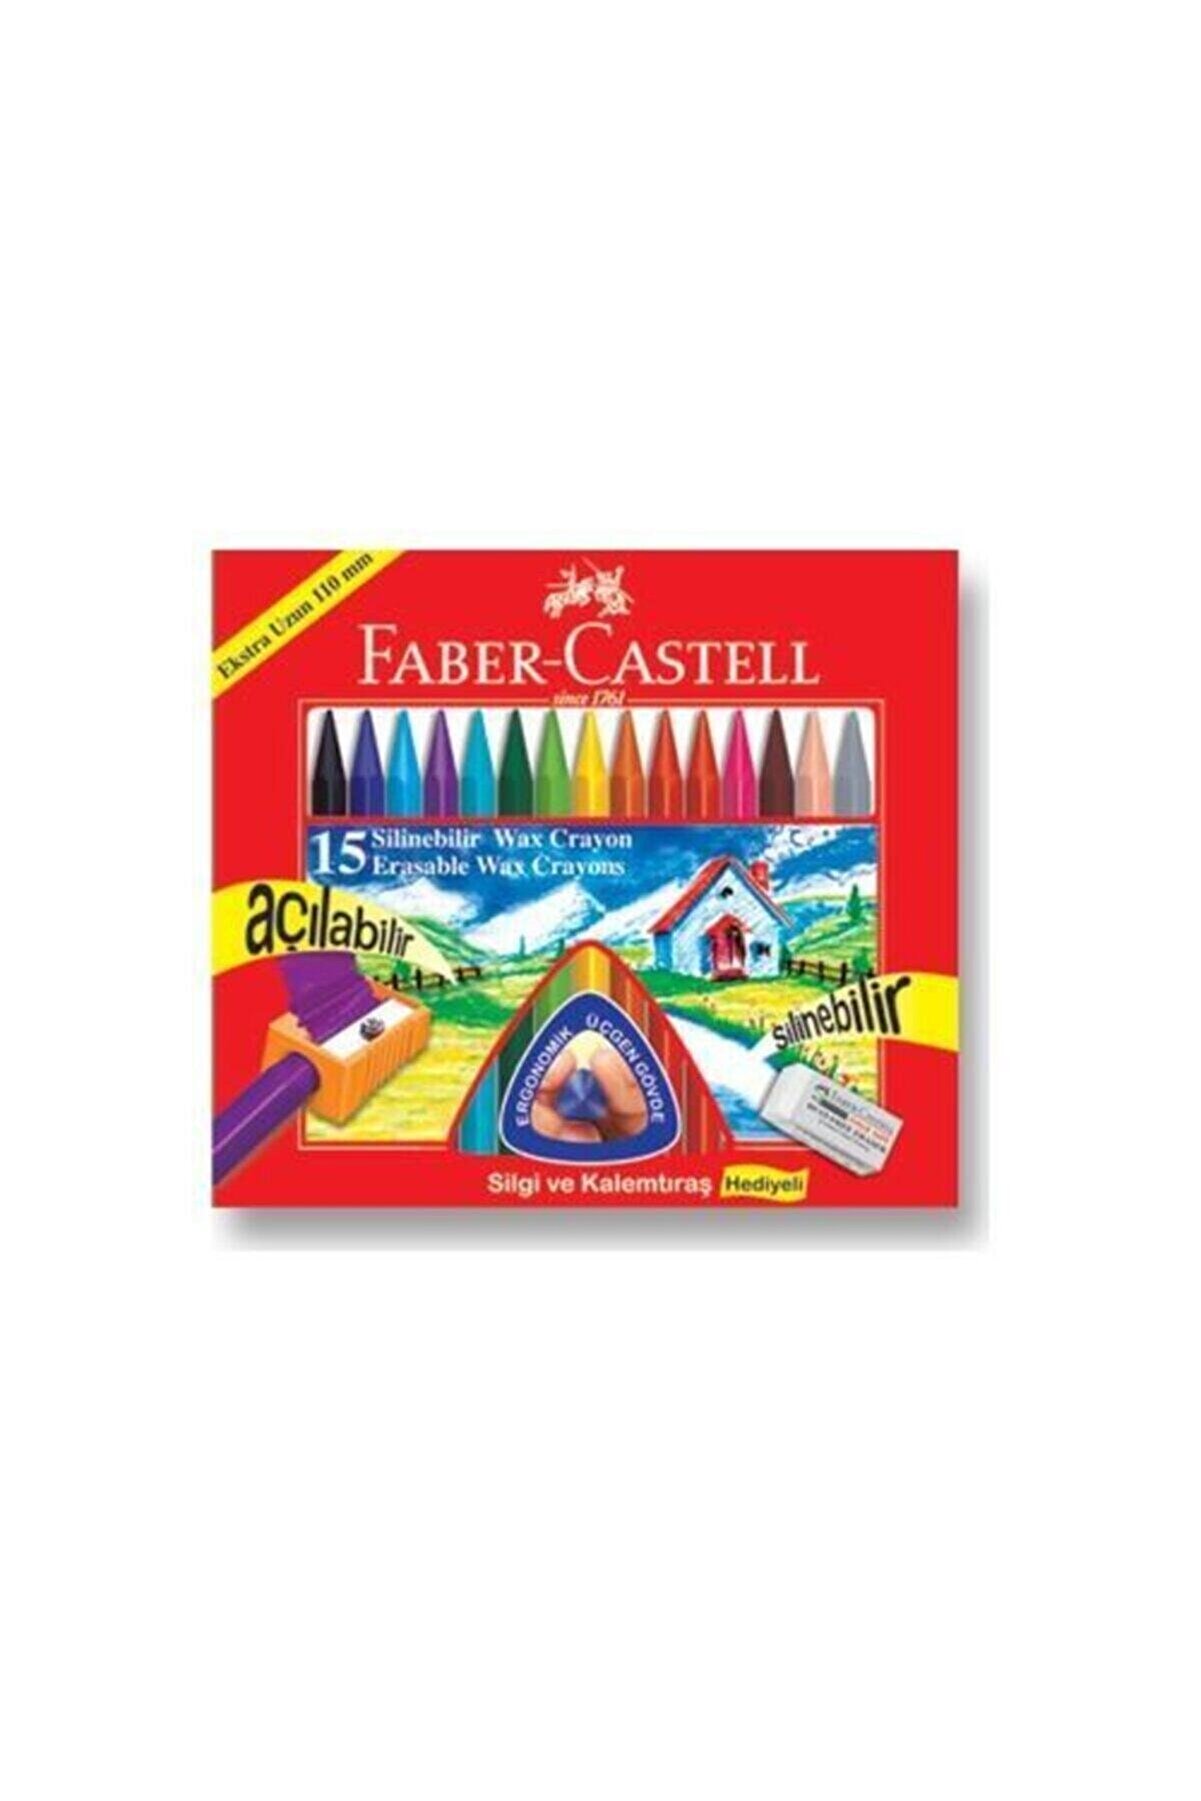 Faber-Castell Silinebilir Mum Boya 15 Renk